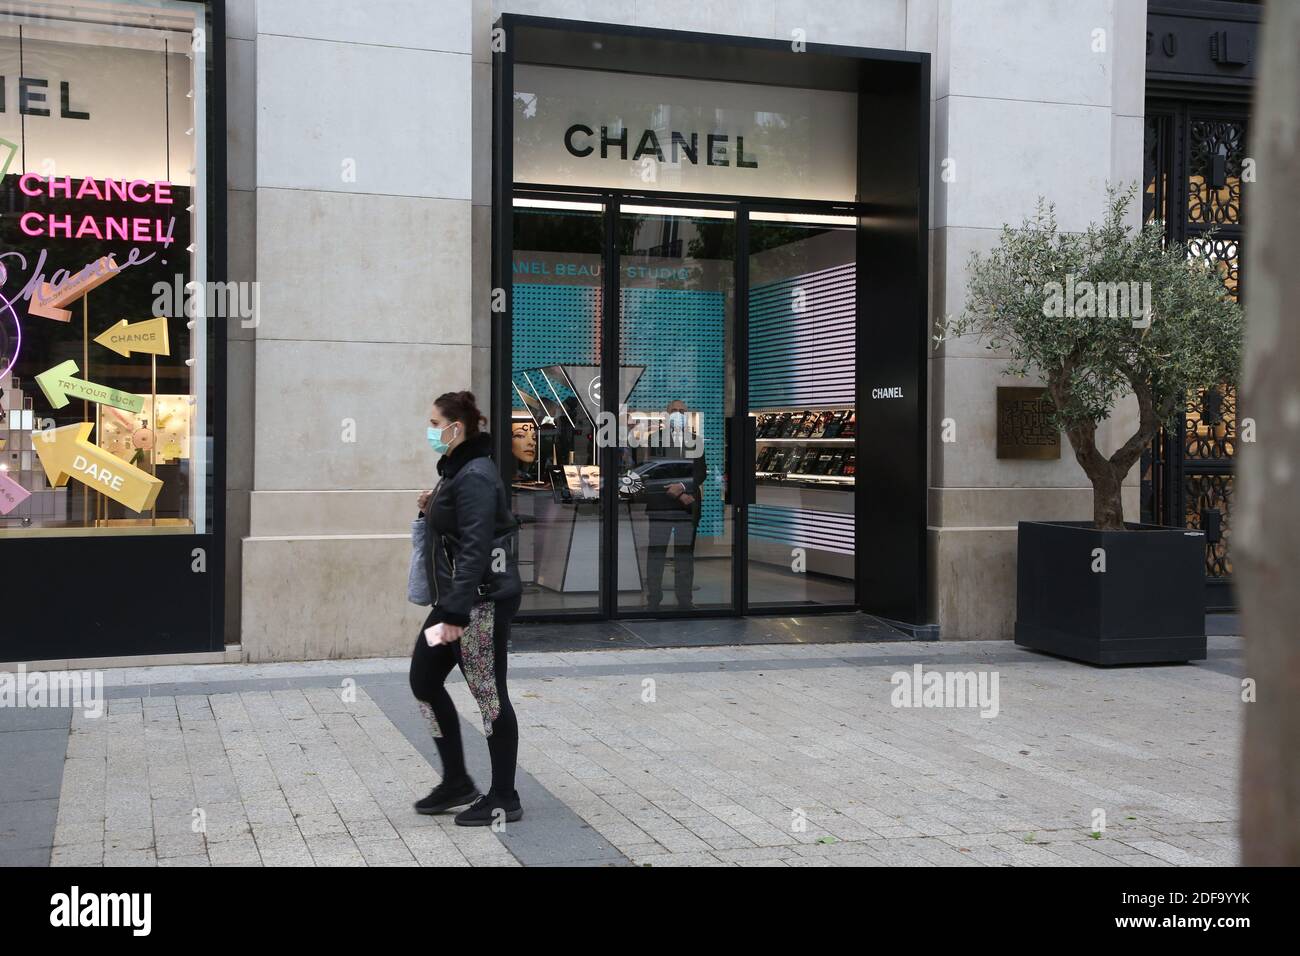 Louis Vuitton opens Champs-Elysees store Sunday amid legal battle